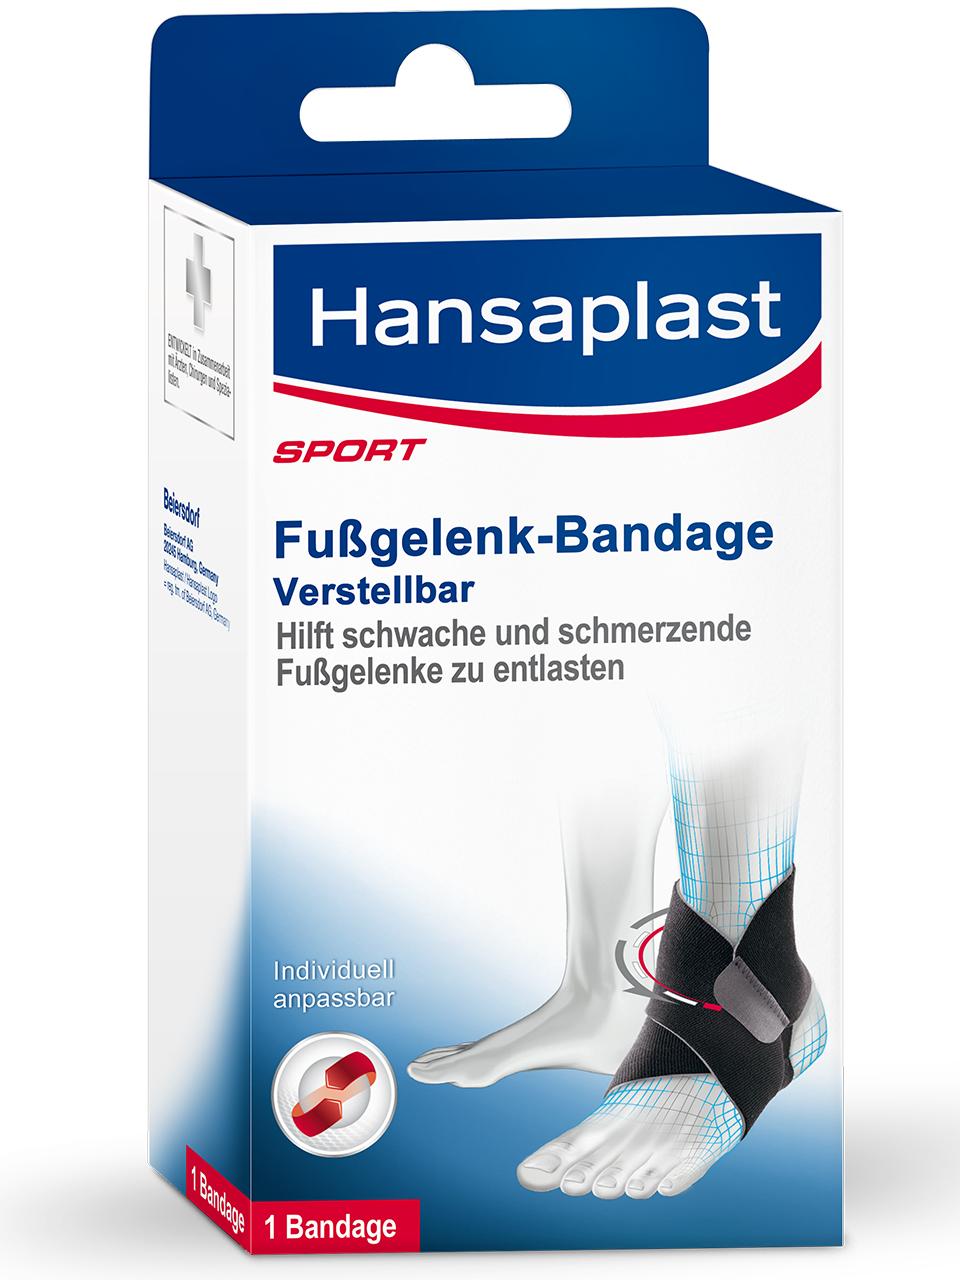 Fußgelenk-Bandage Hansaplast